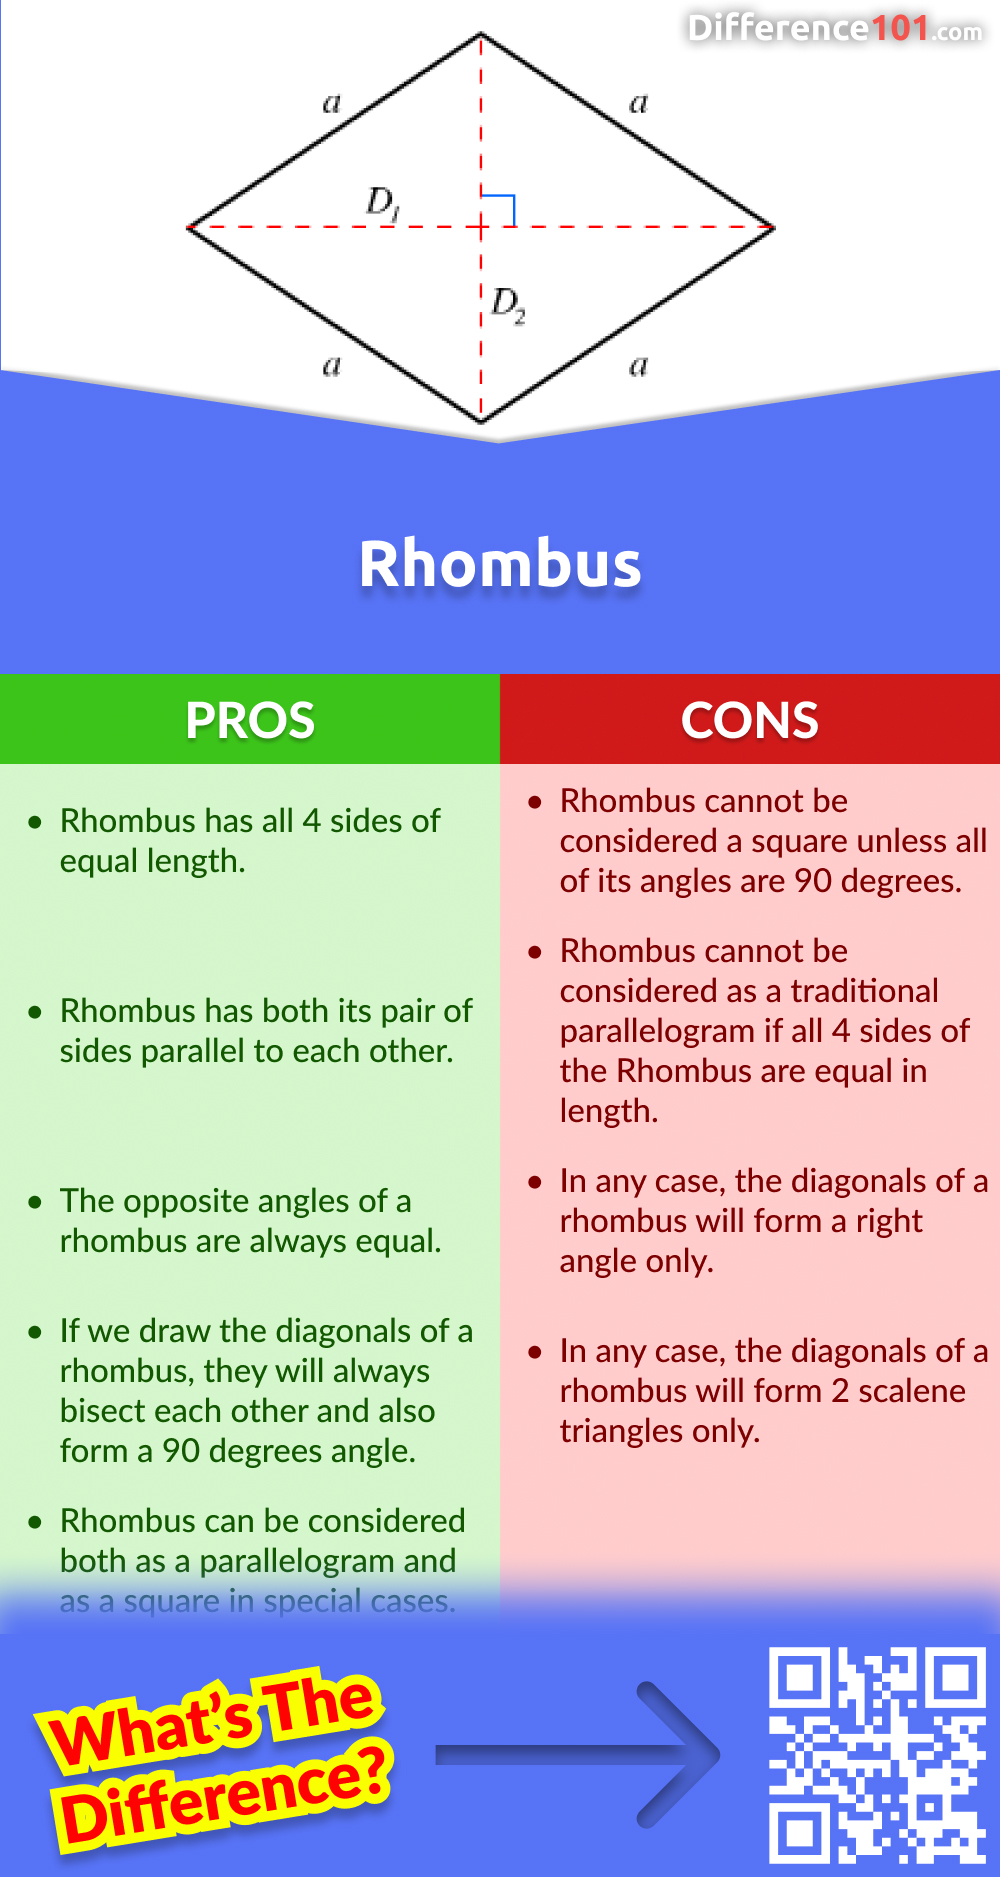 Rhombus Pros & Cons